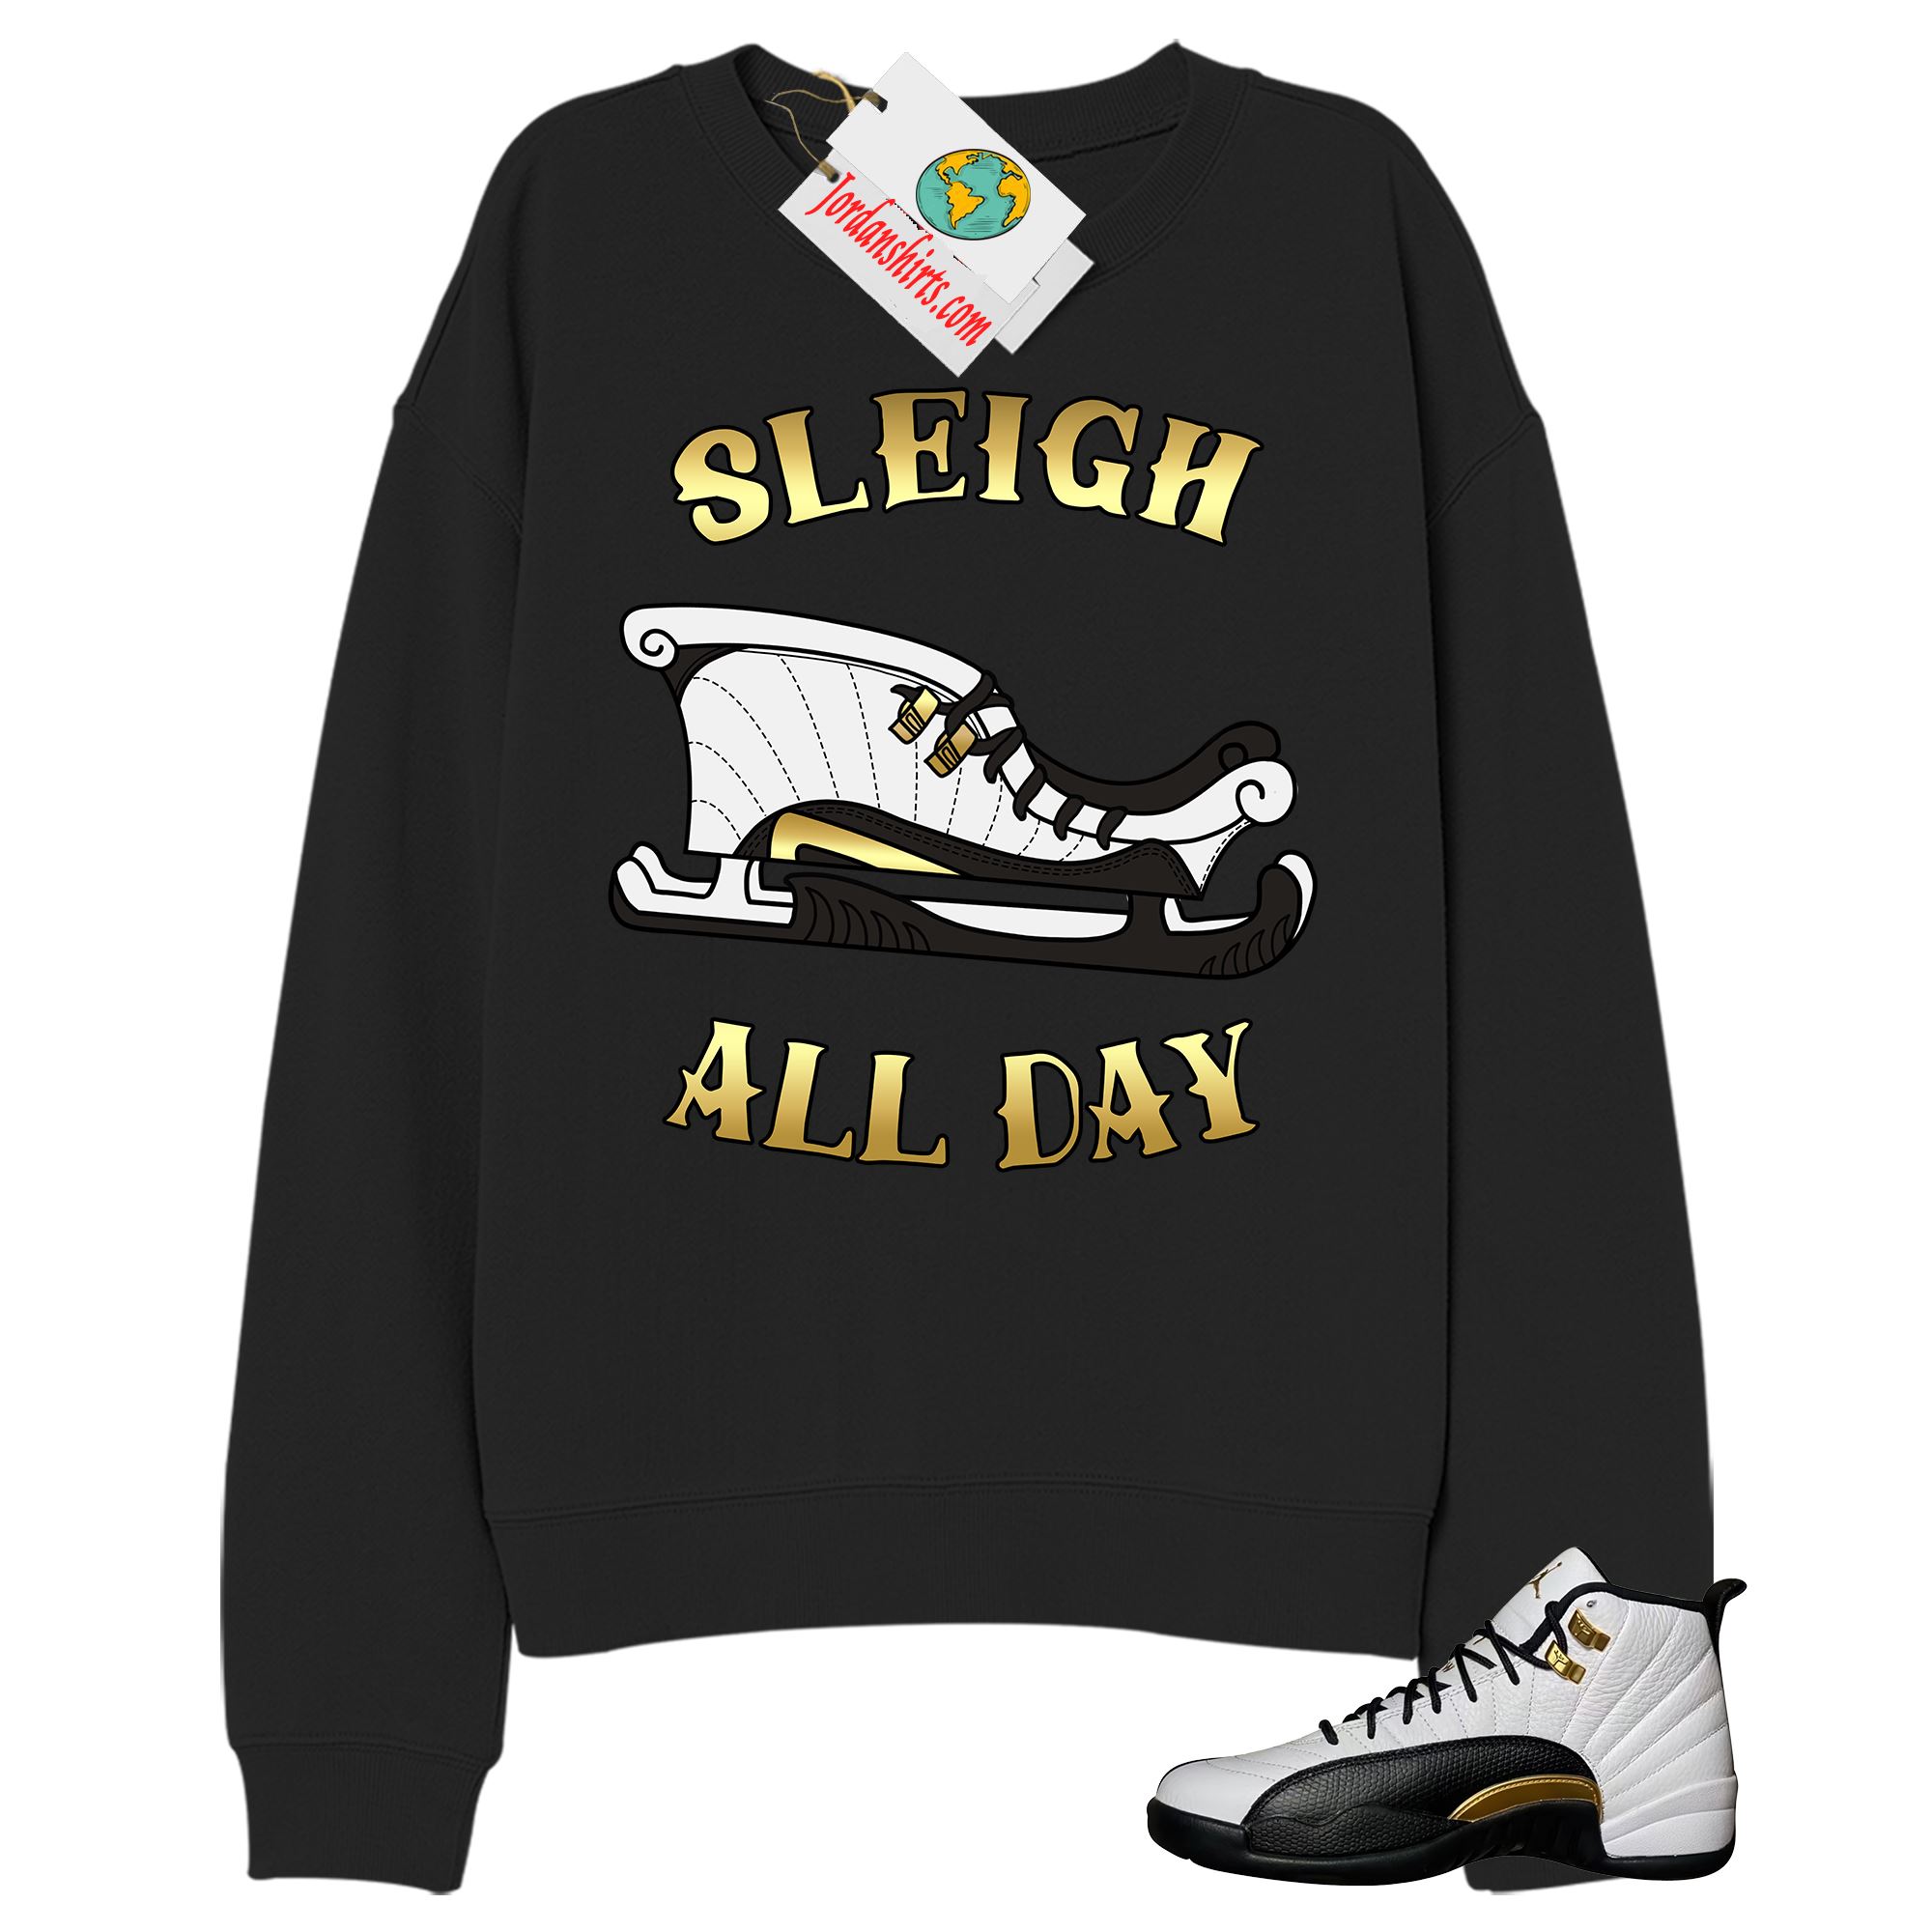 Jordan 12 Sweatshirt, Sneaker Sleigh Black Sweatshirt Air Jordan 12 Royalty 12s Plus Size Up To 5xl